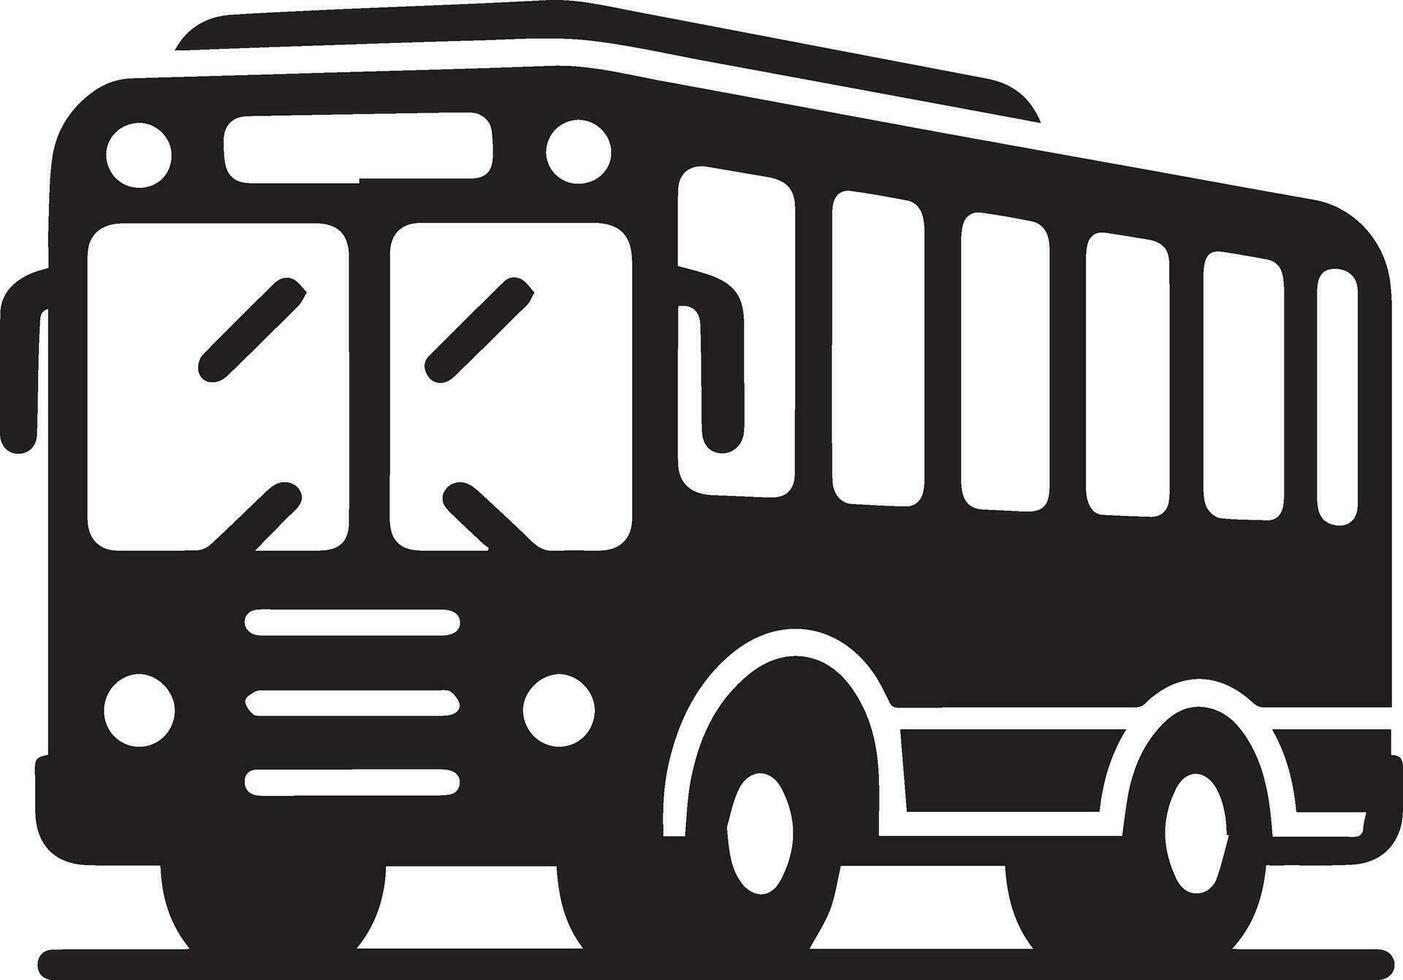 A Bus Icon vector silhouette black color 7